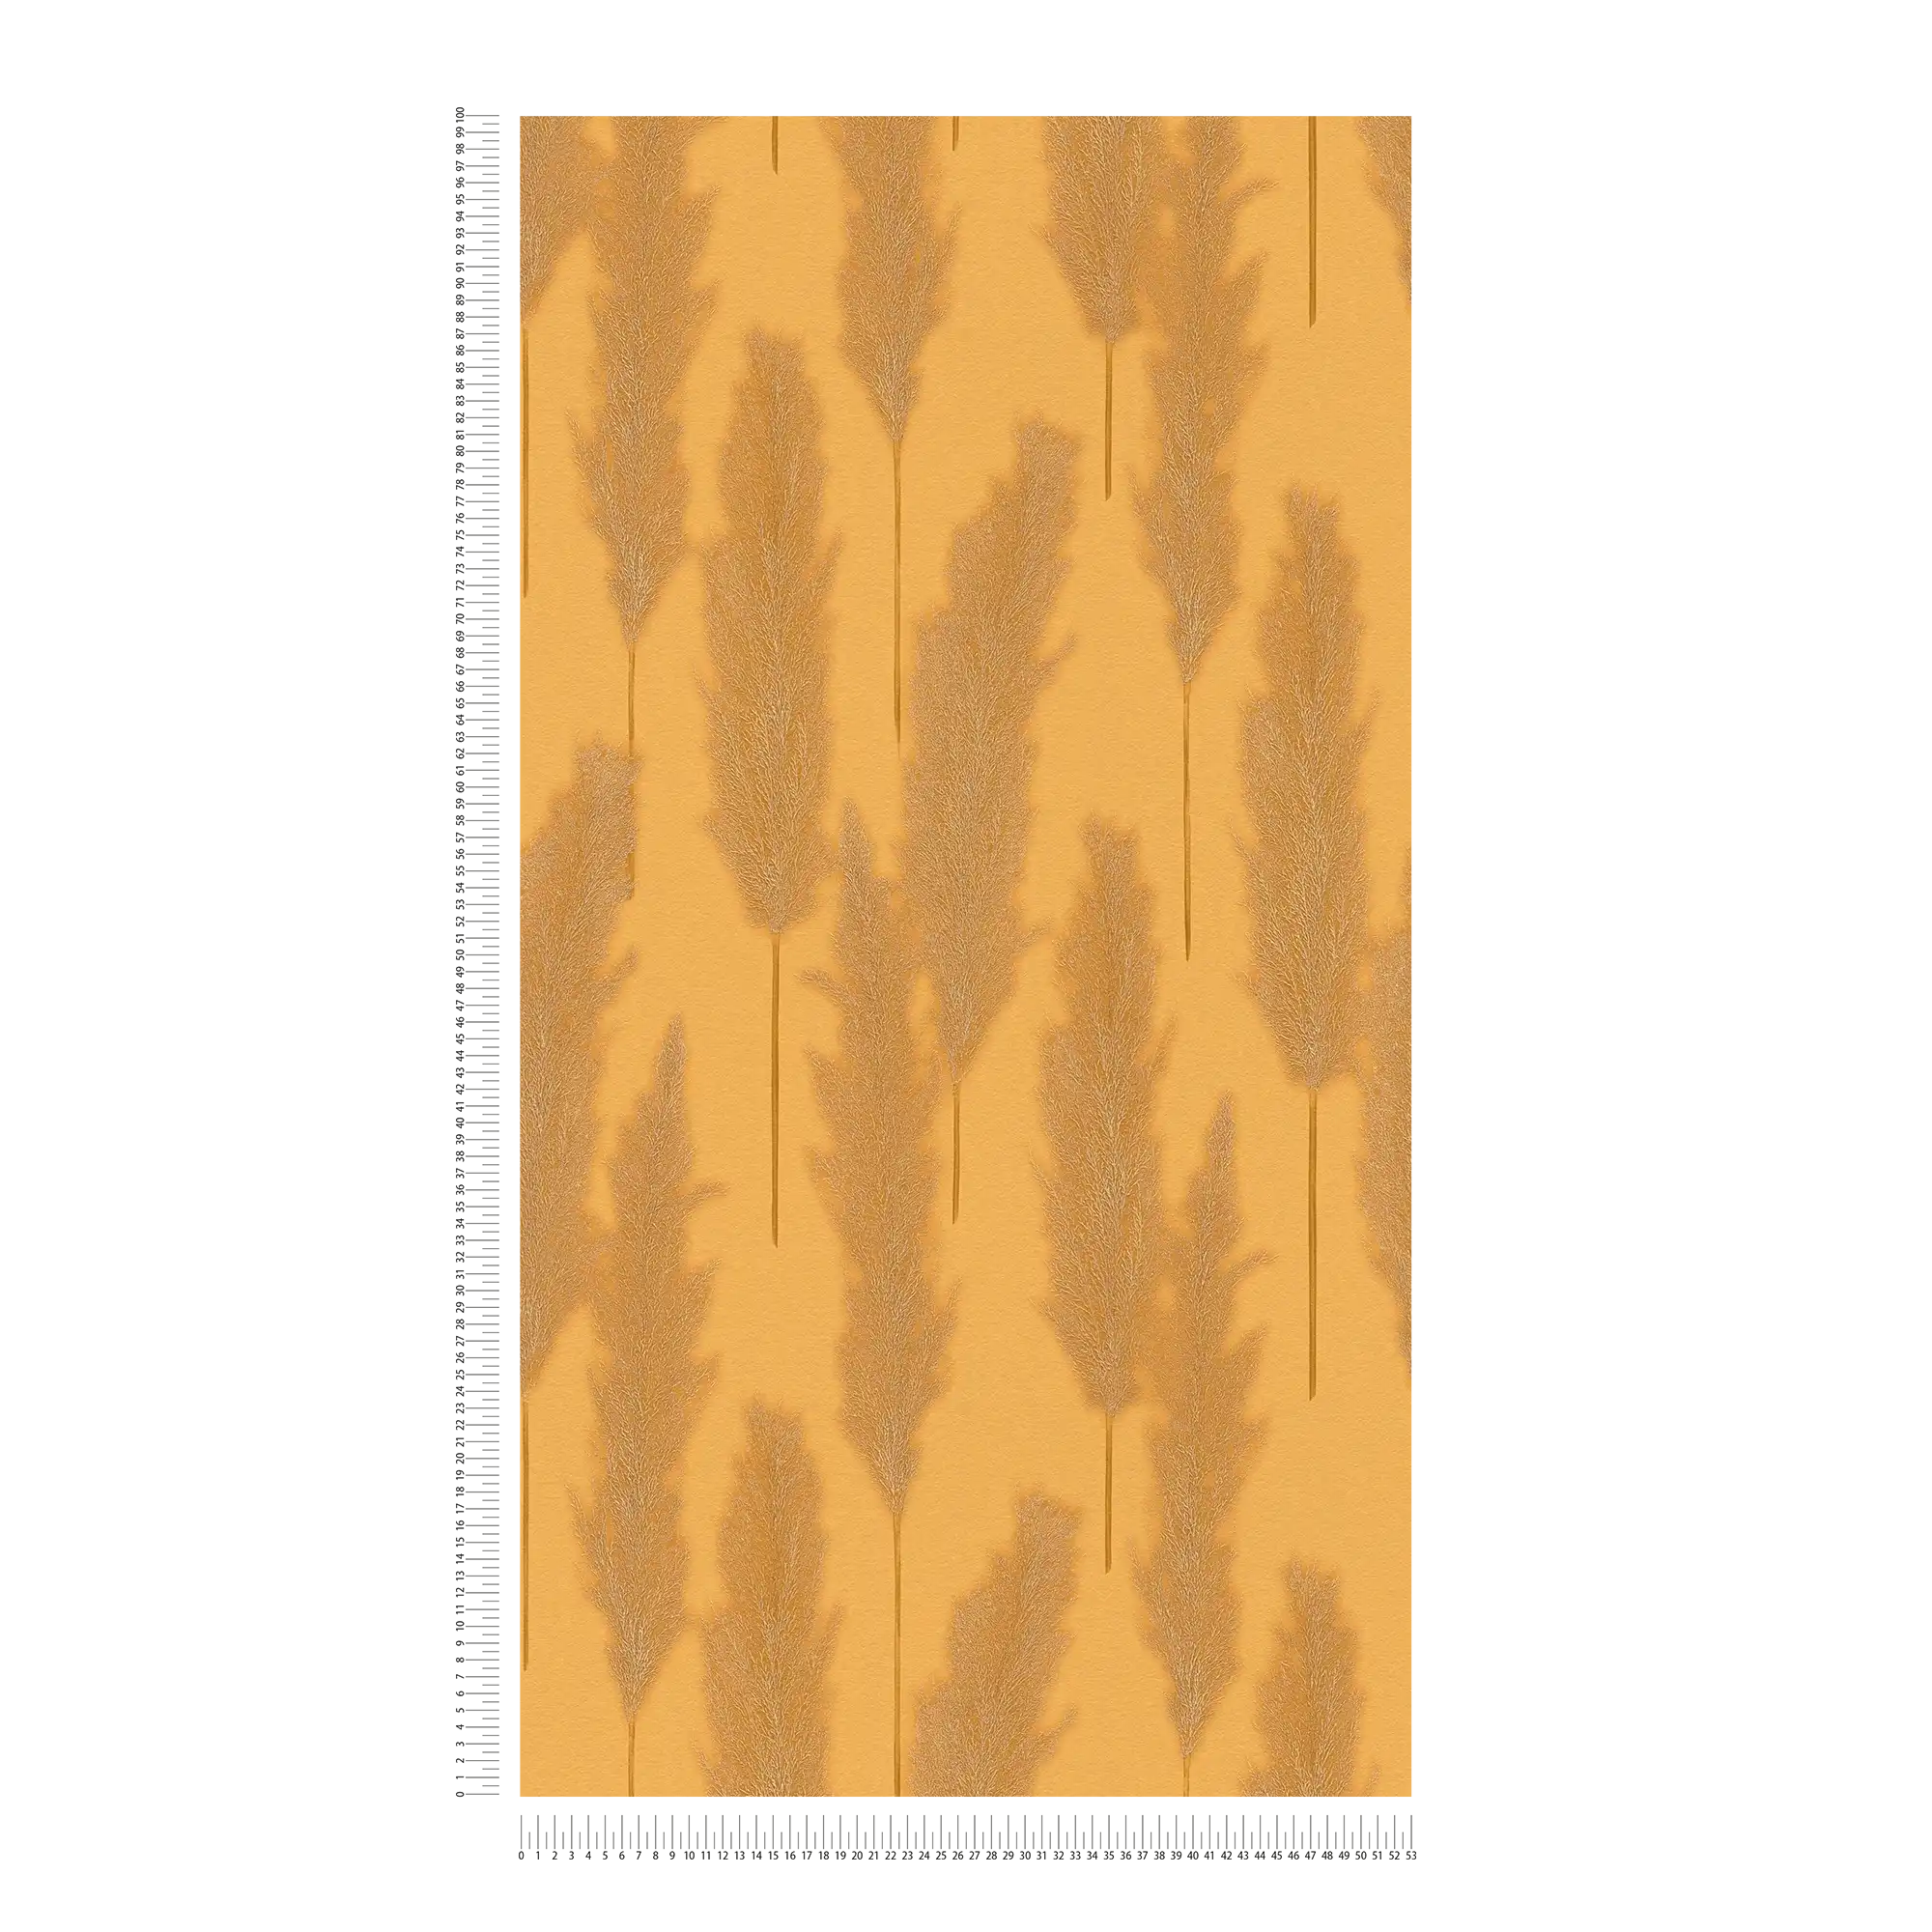             Wallpaper with pampas grass design - yellow, metallic
        